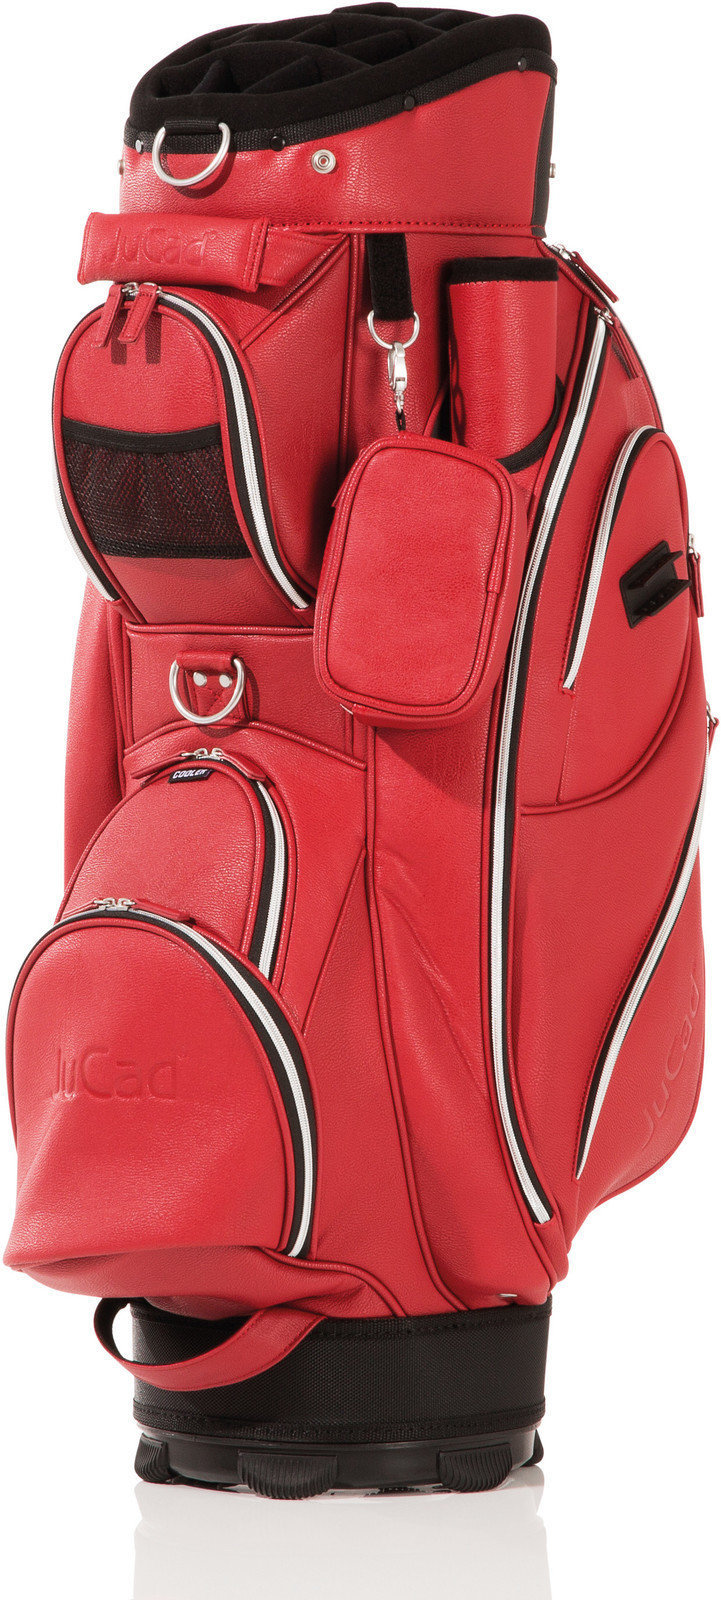 Golflaukku Jucad Style Red Golflaukku